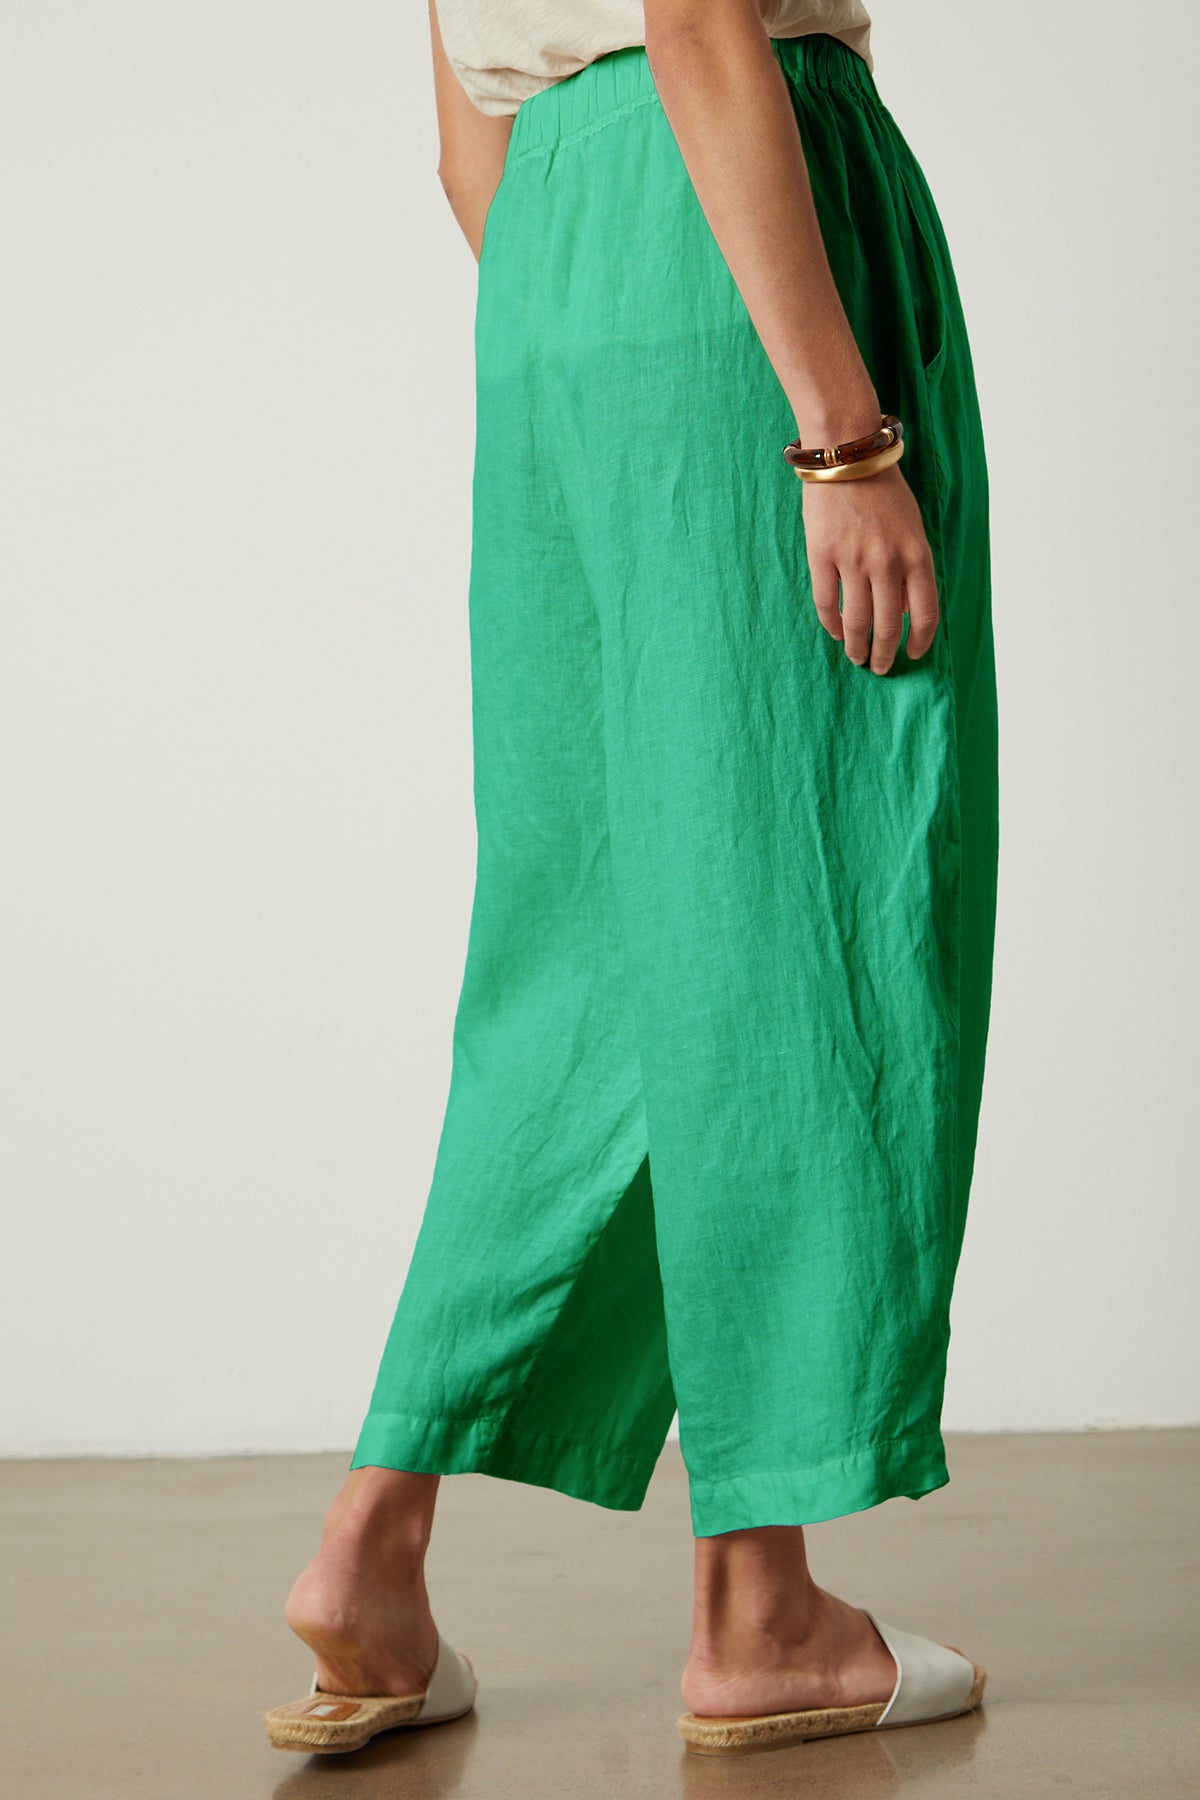 Hannah Linen Pant in jade green back & side-26142779506881